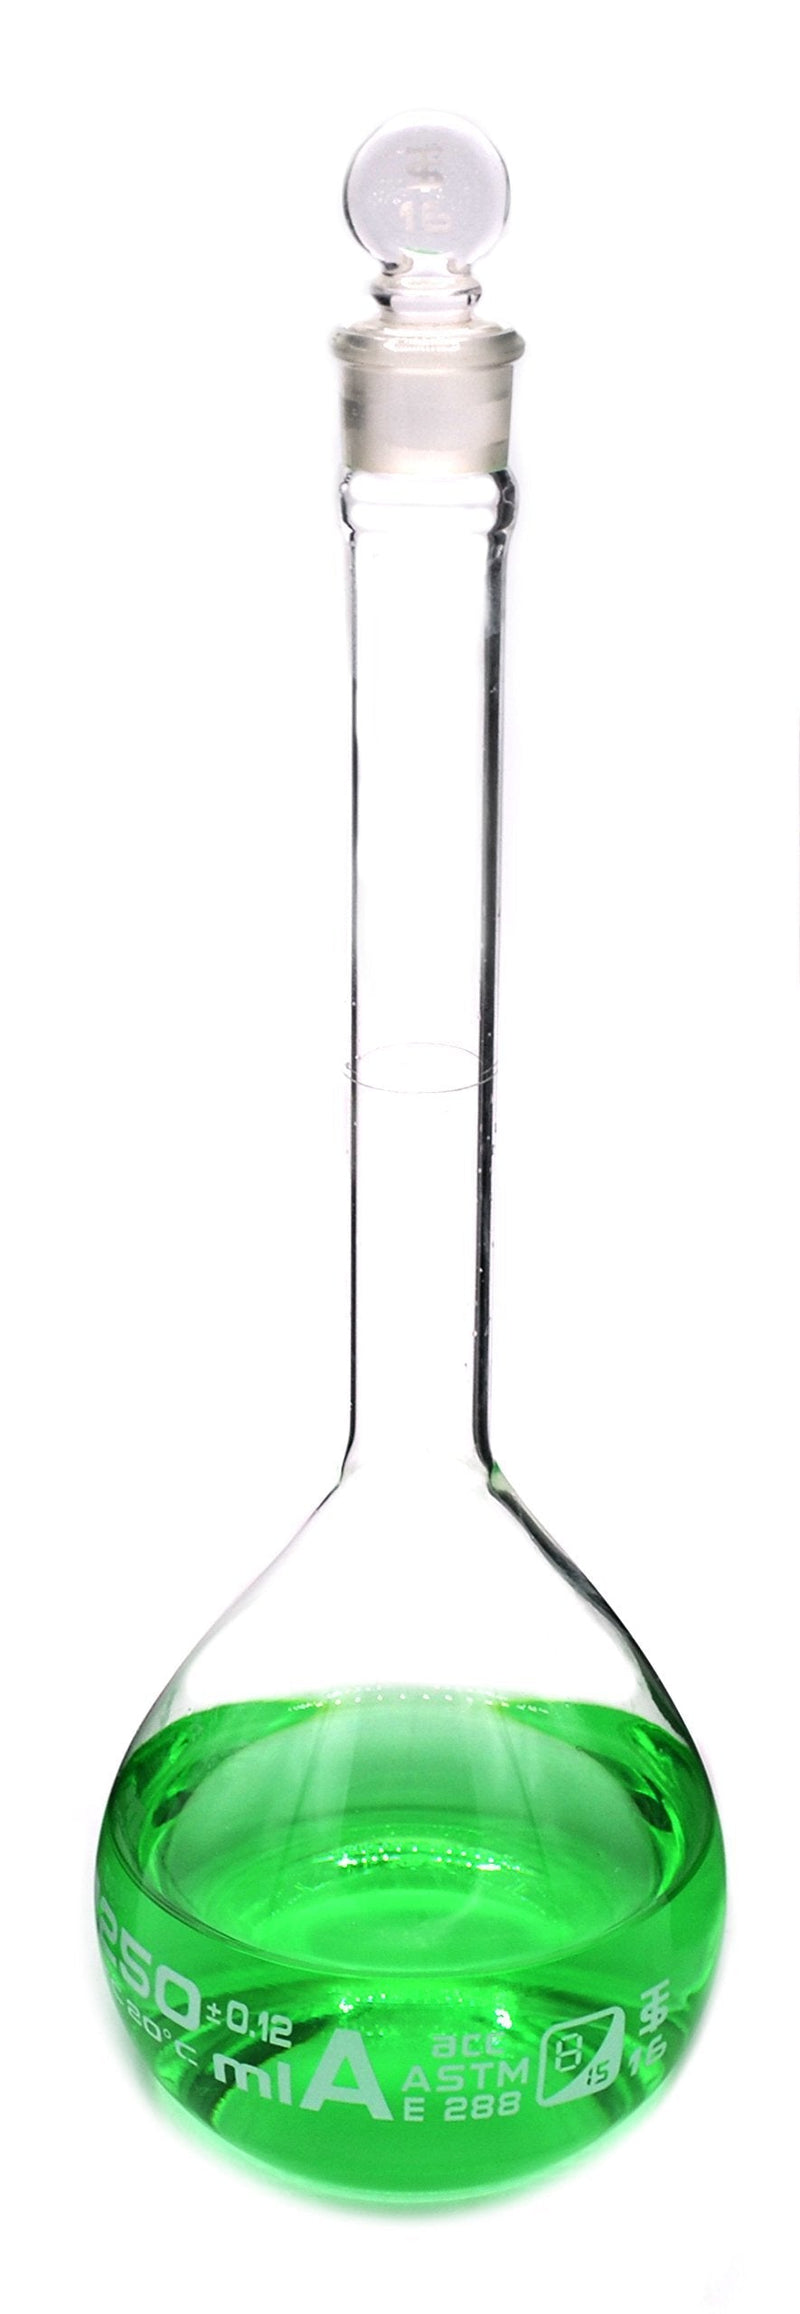 Volumetric Flask, 250ml - Class A, ASTM - Tolerance ±0.120 ml - Glass Stopper - Single, White Graduation - Eisco Labs - LeoForward Australia